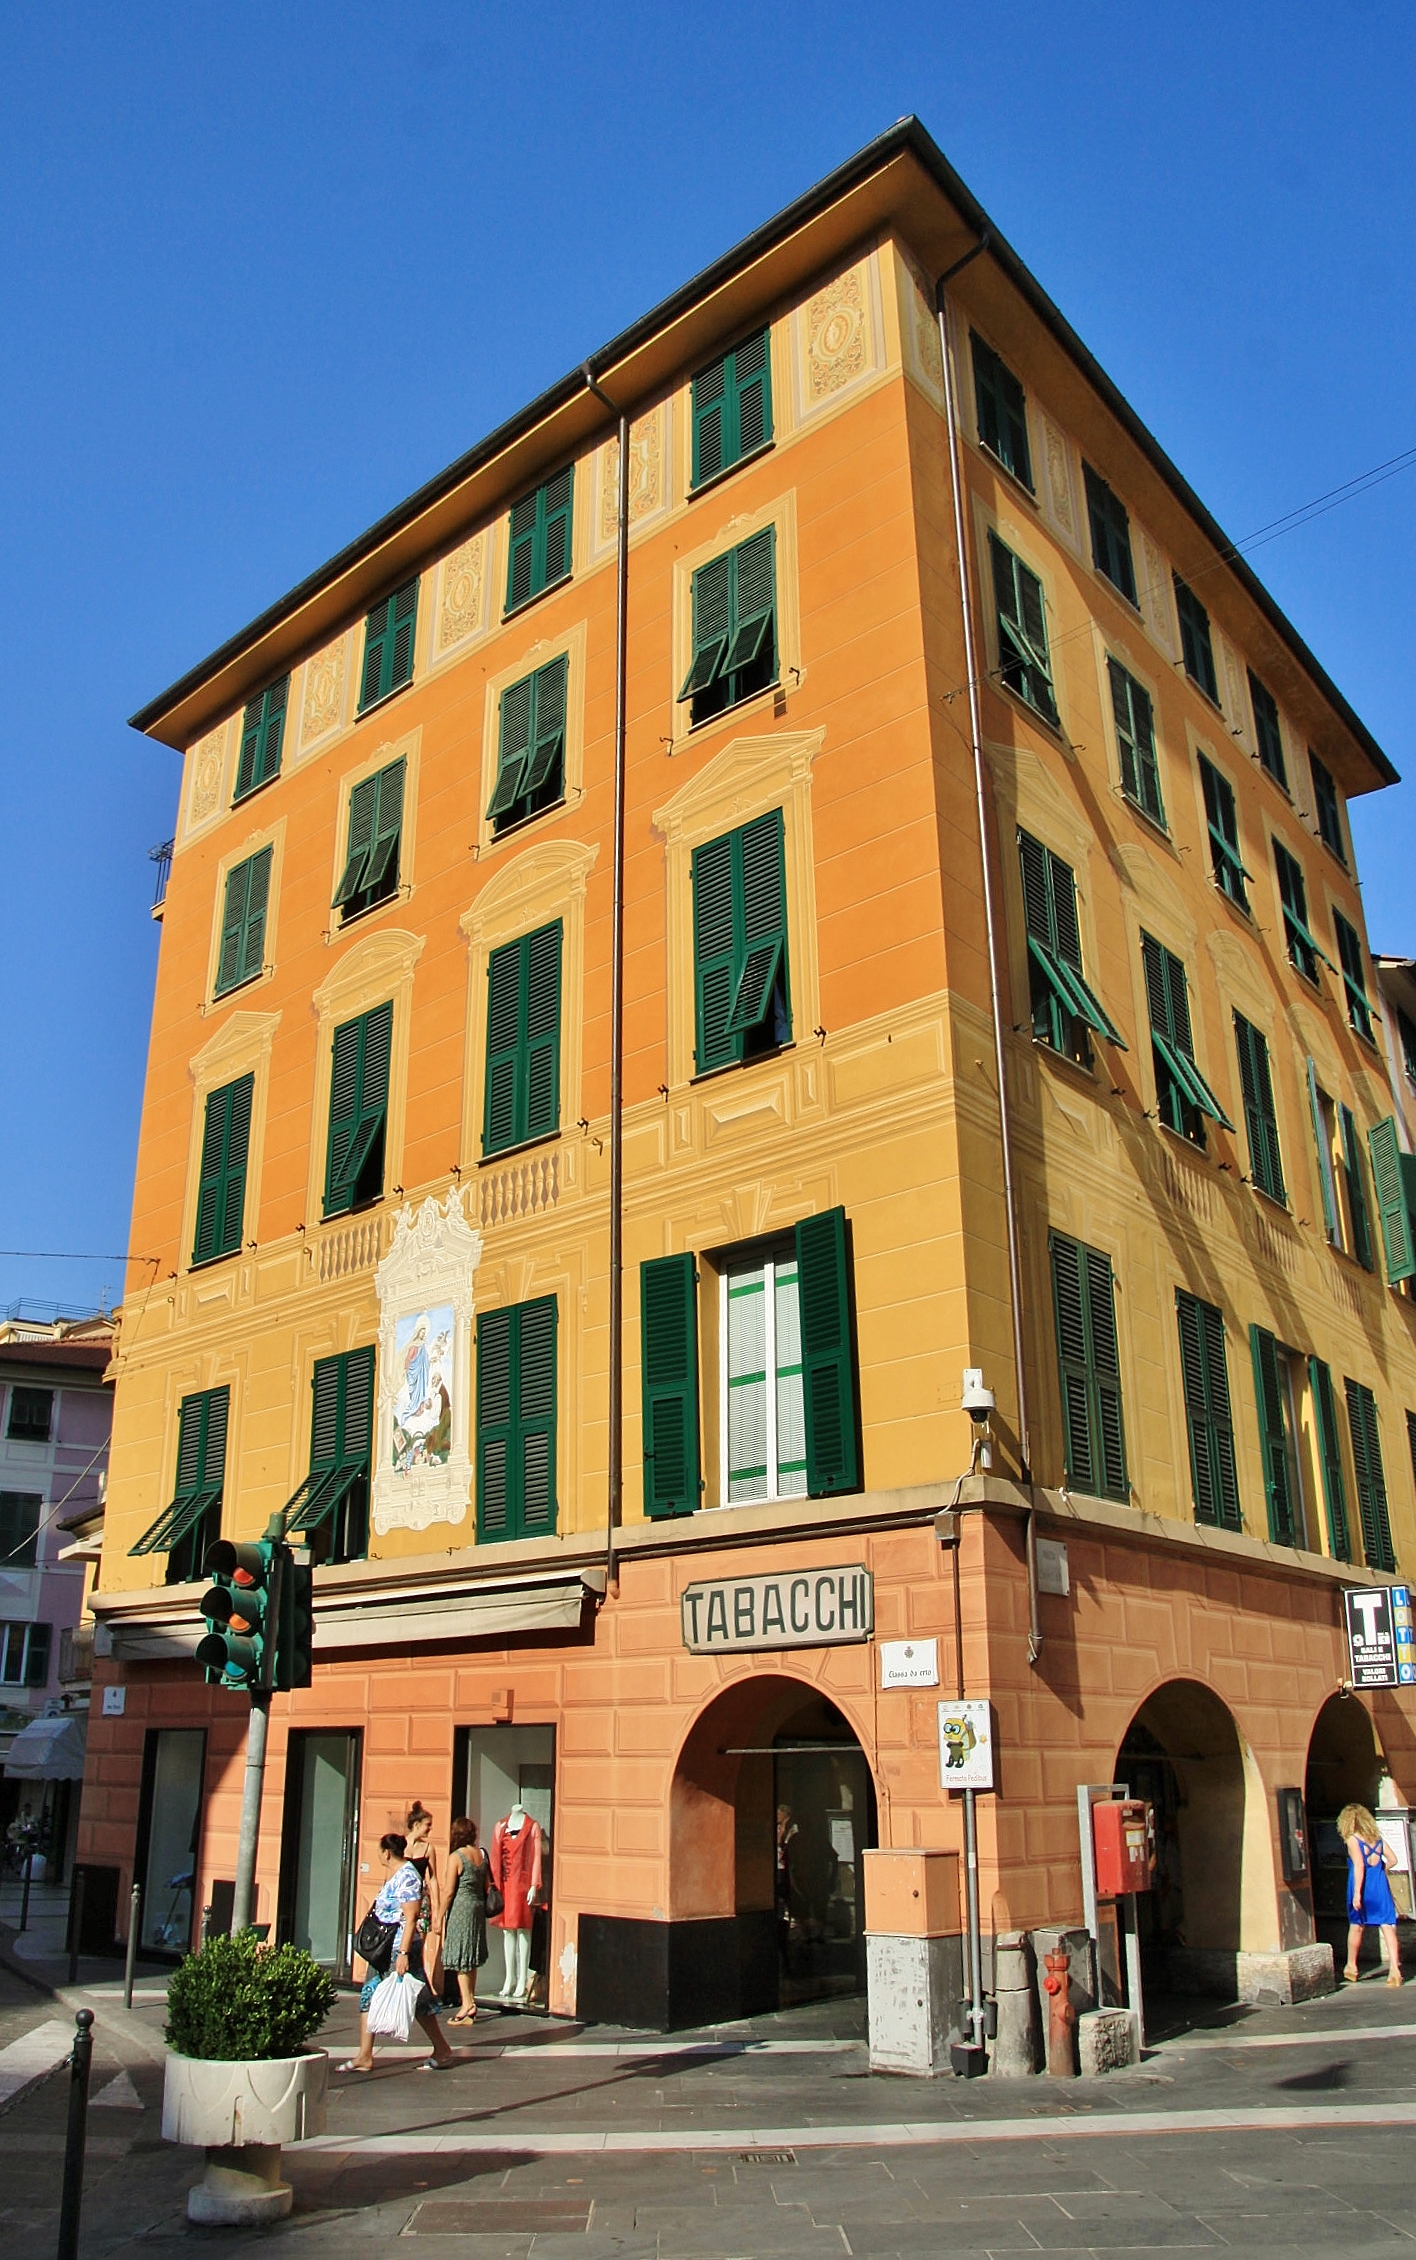 Foto: Centro histórico - Rapallo (Liguria), Italia